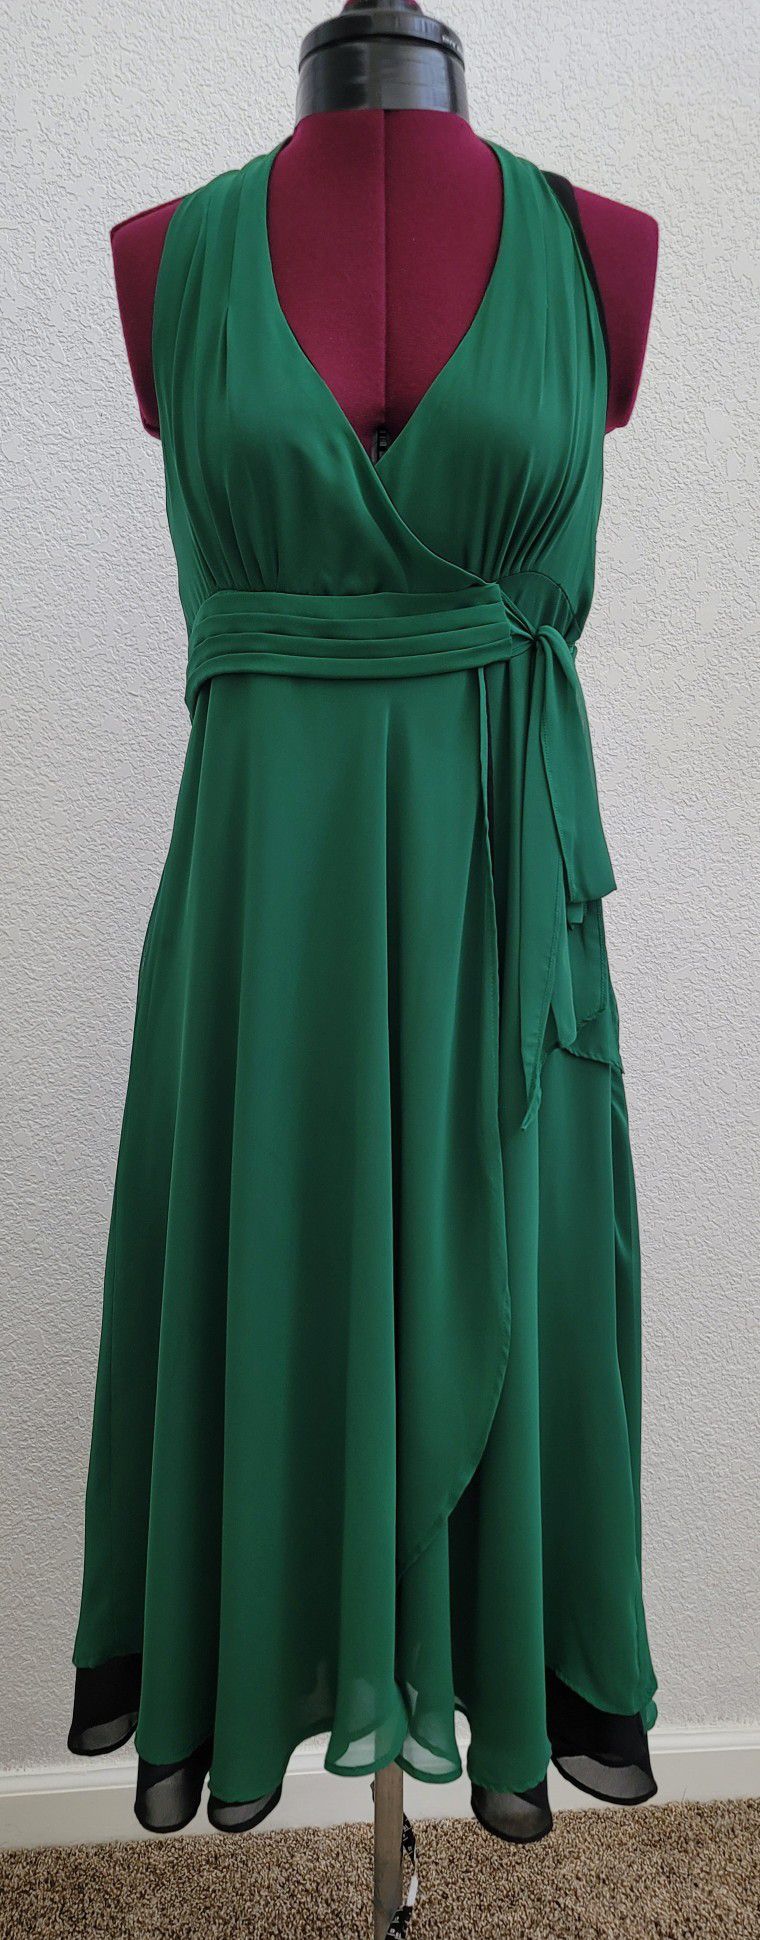 Green Halter High-Low Dress, FOREVER 21, sz M